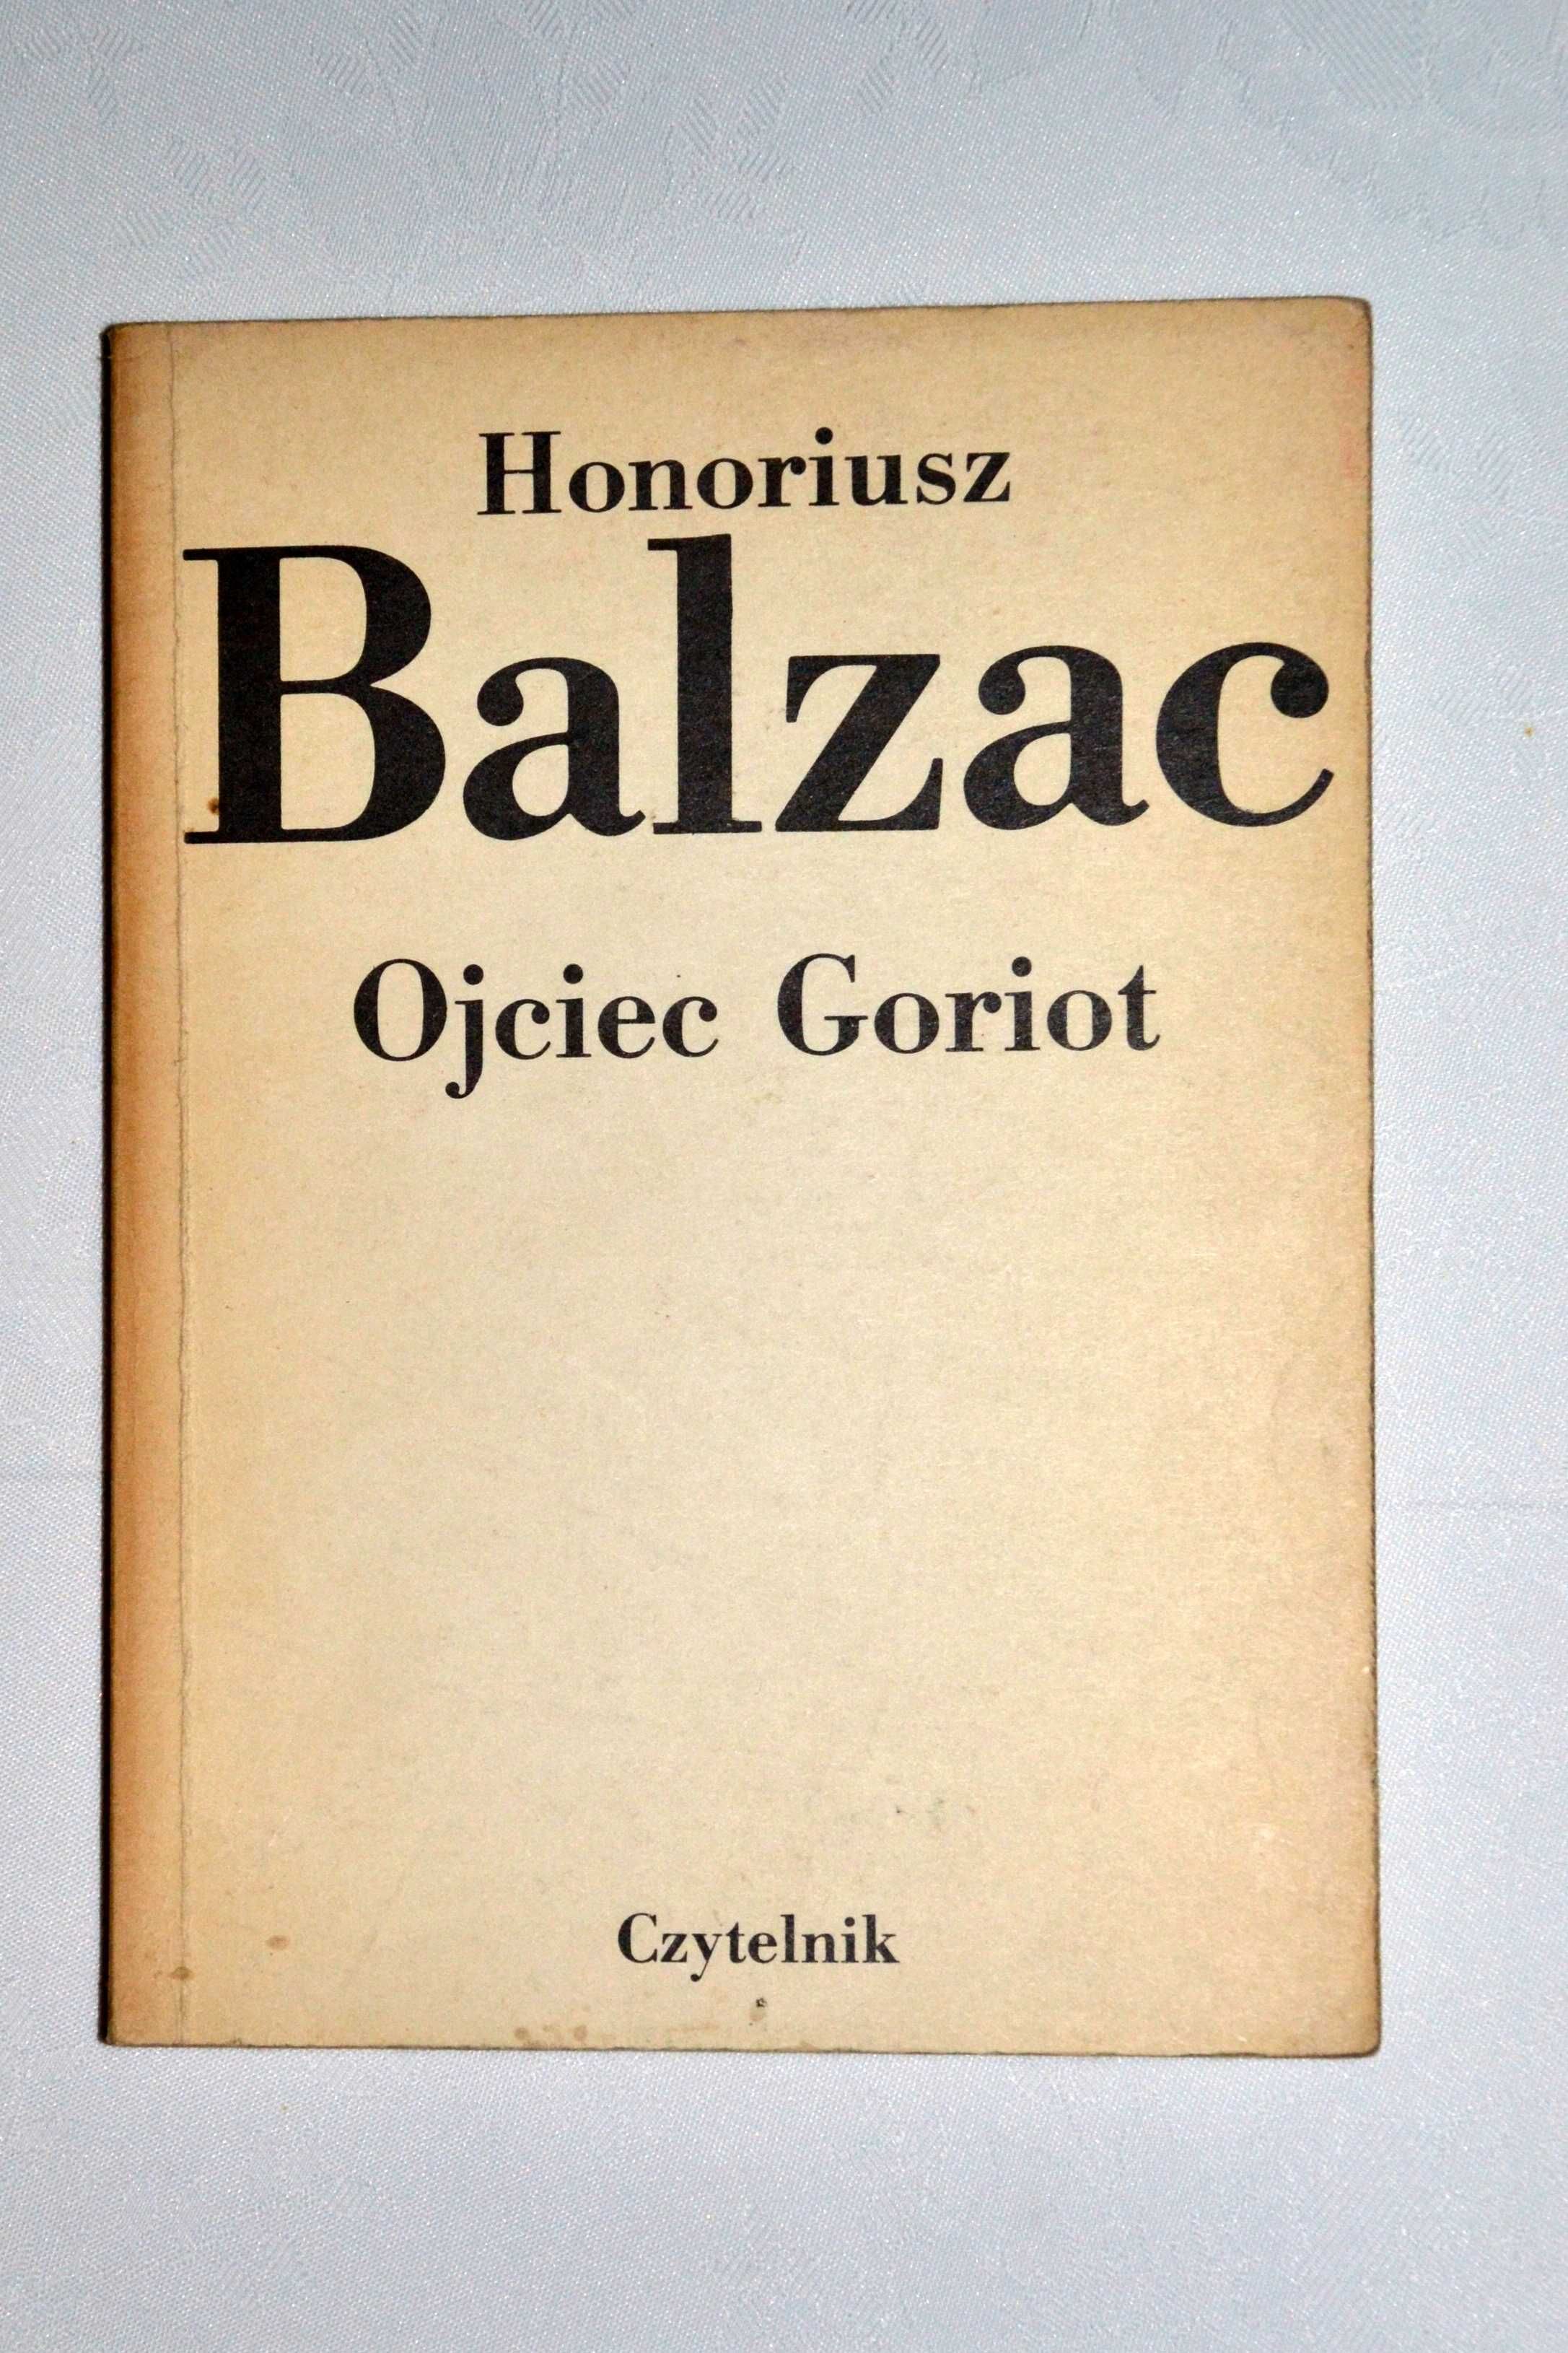 H. Balzac - "Ojciec Goriot"